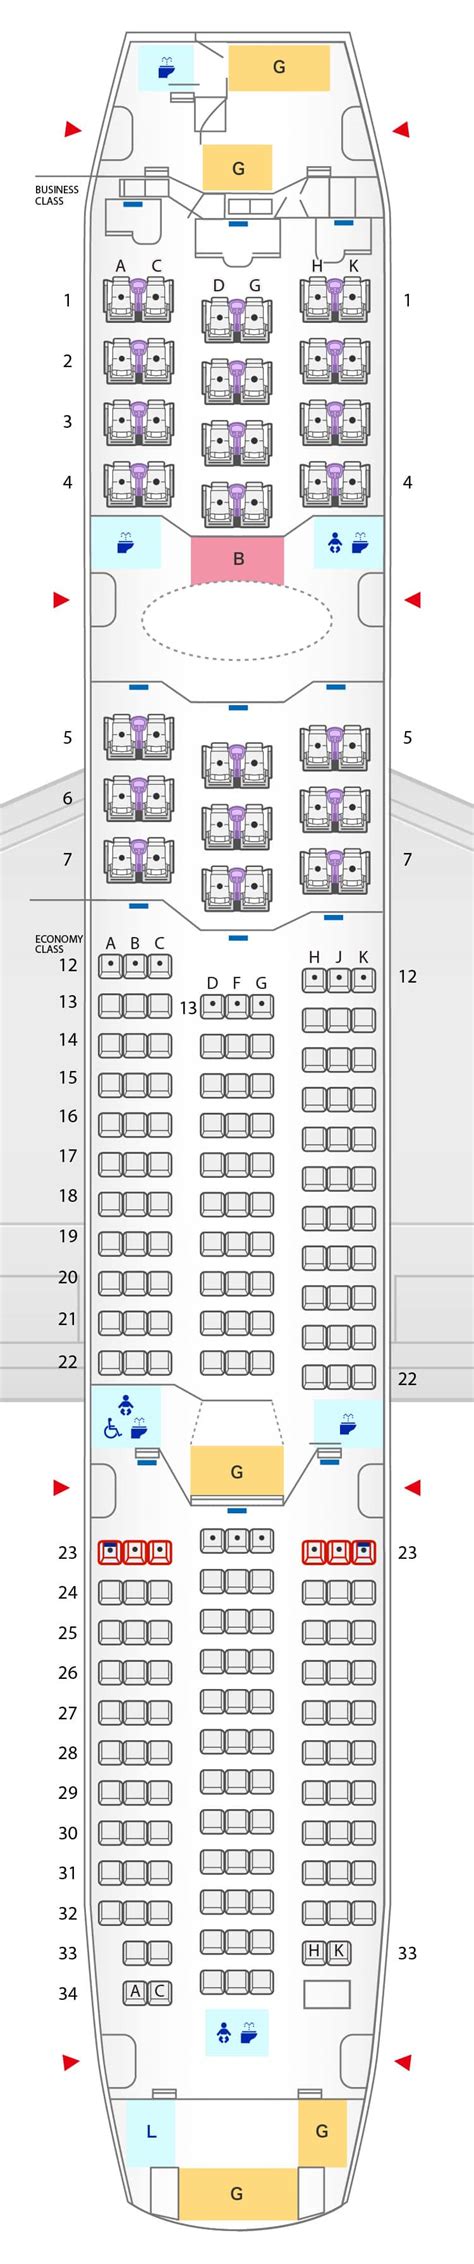 787 Dreamliner Seating Plan Cabinets Matttroy